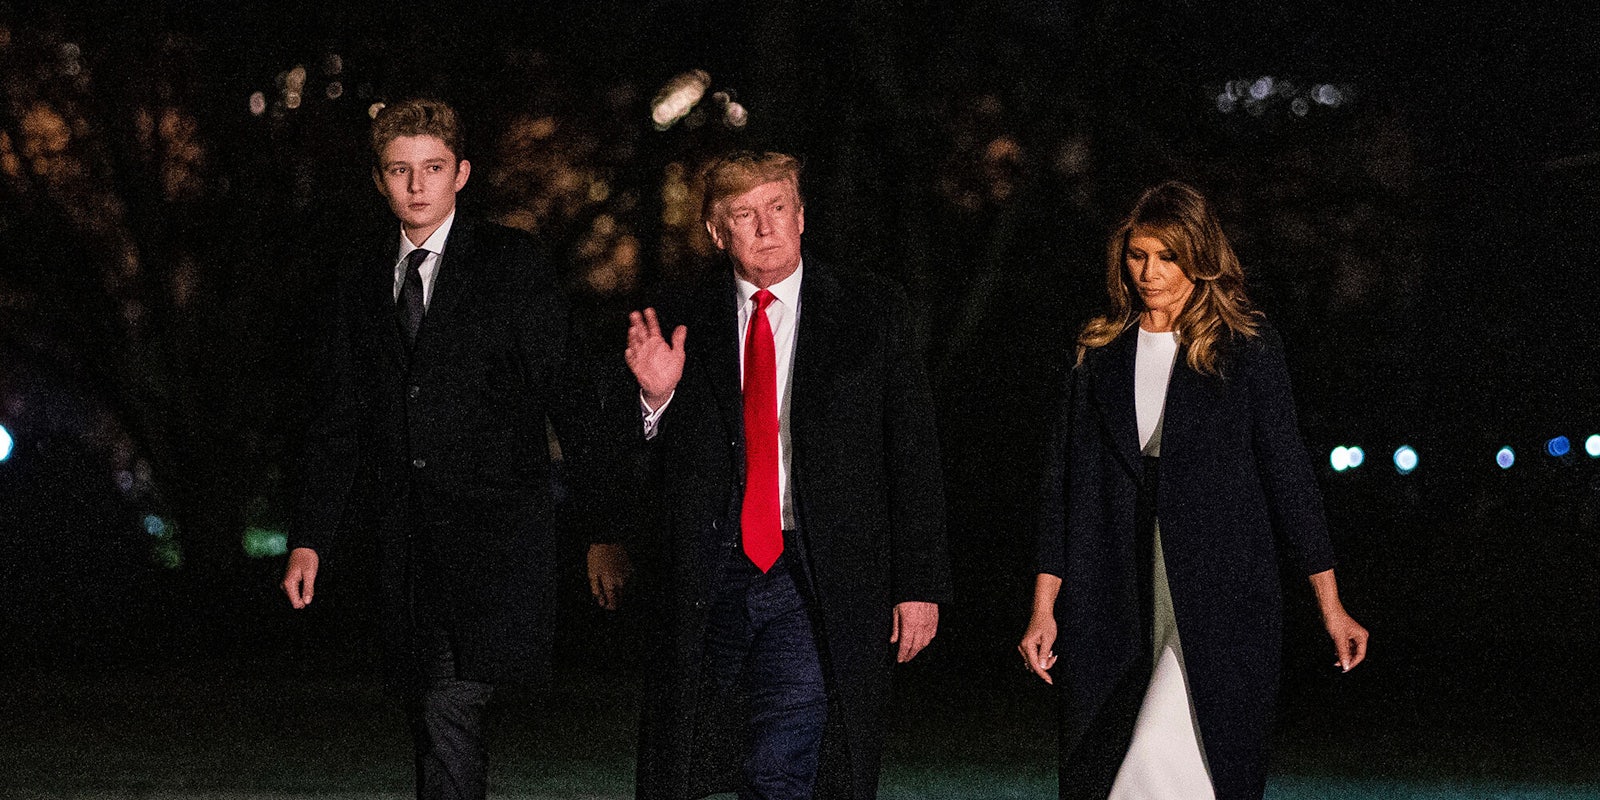 Barron, Donald and Melania Trump